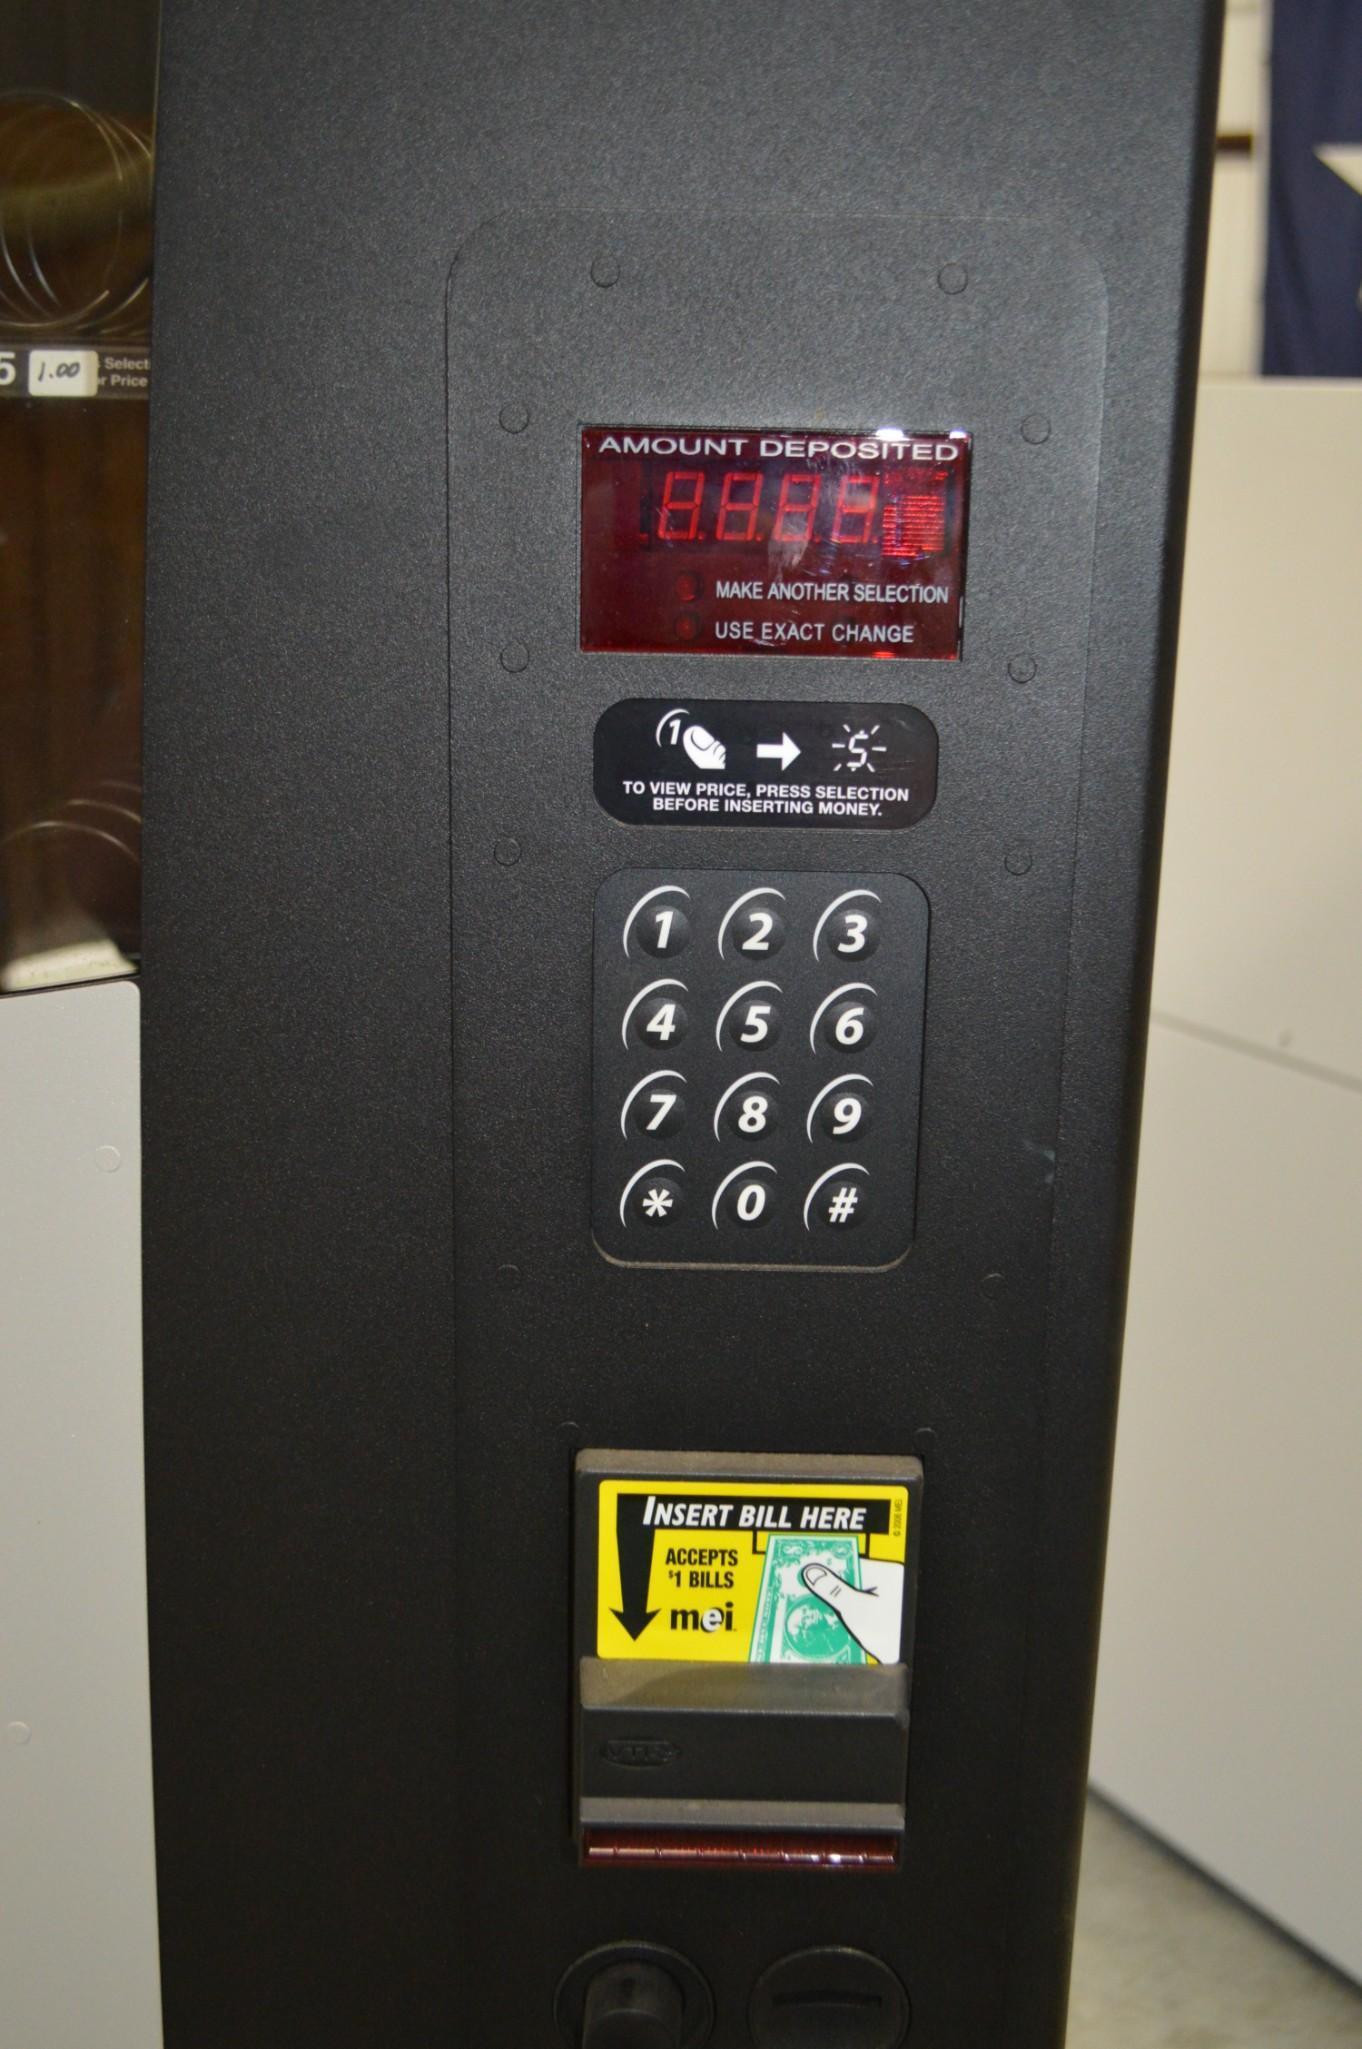 Futura Commercial Combo Vending Machine, Snacks and Drinks, 115V